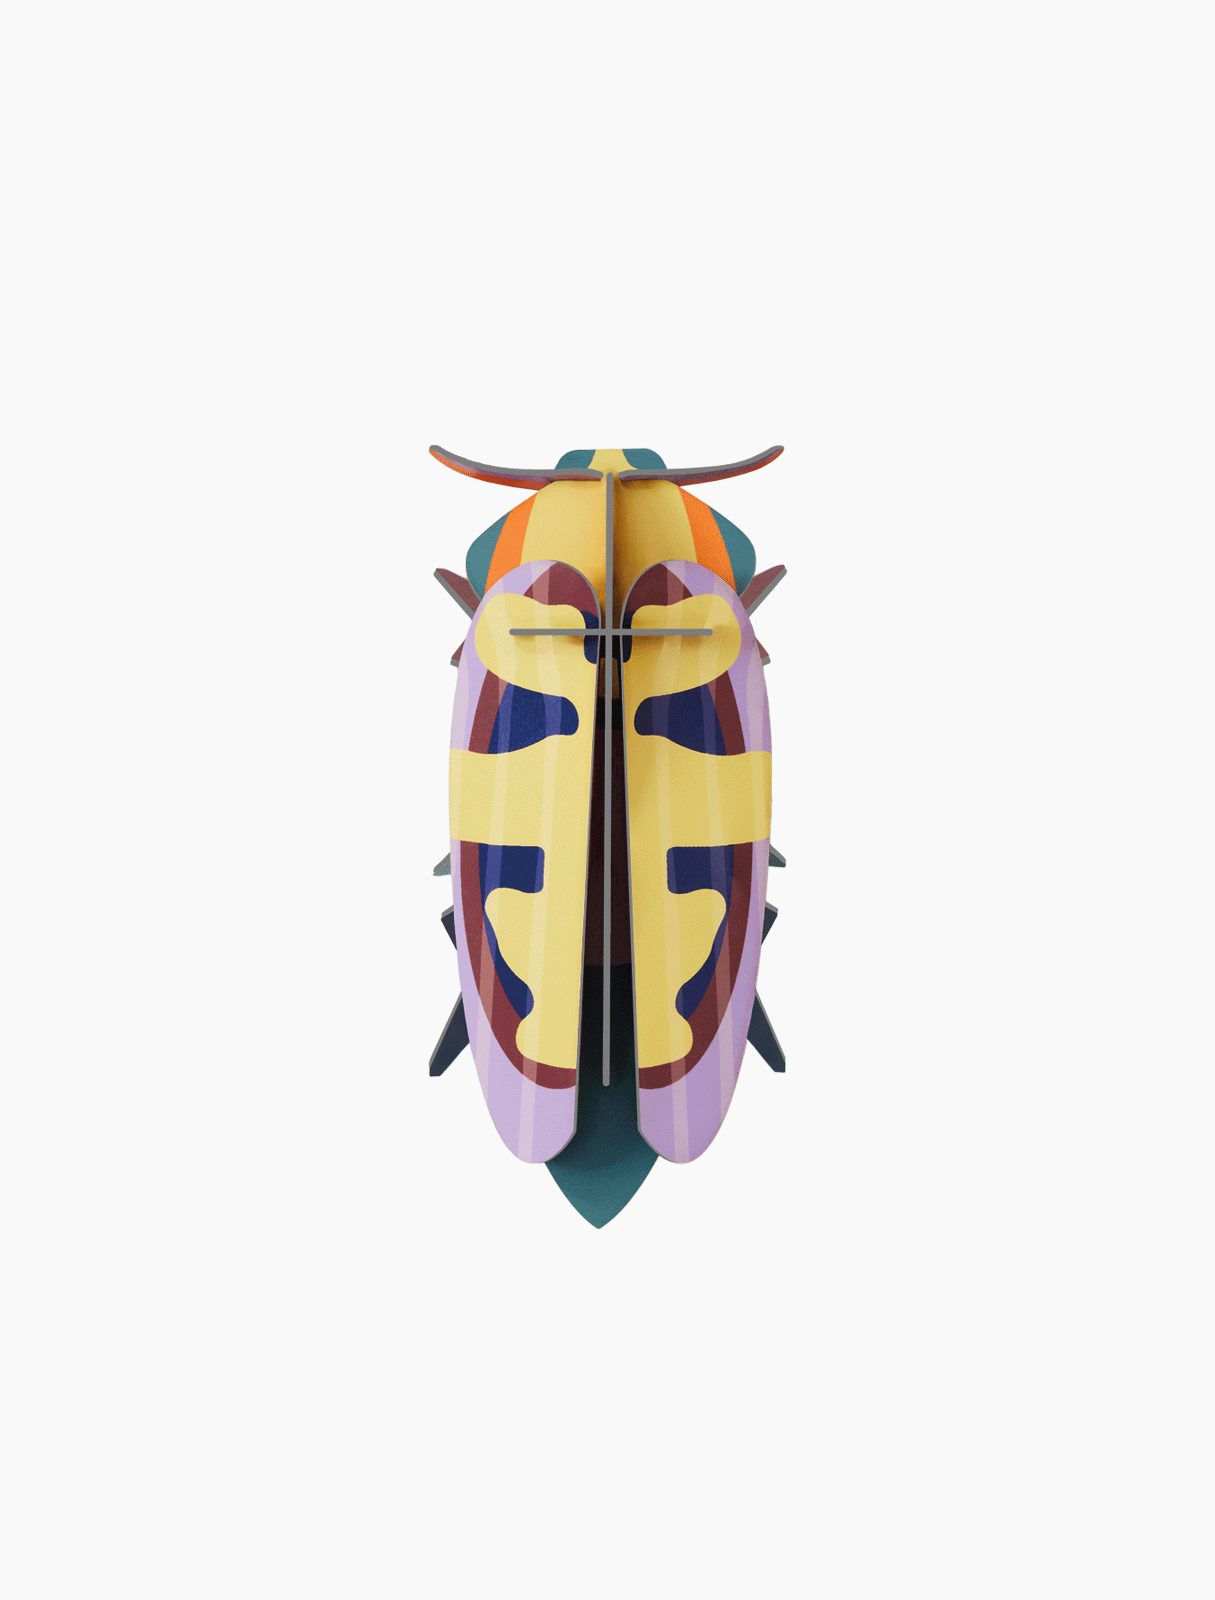 Mango Flower Beetle - 3D DIY Wall Art Kit